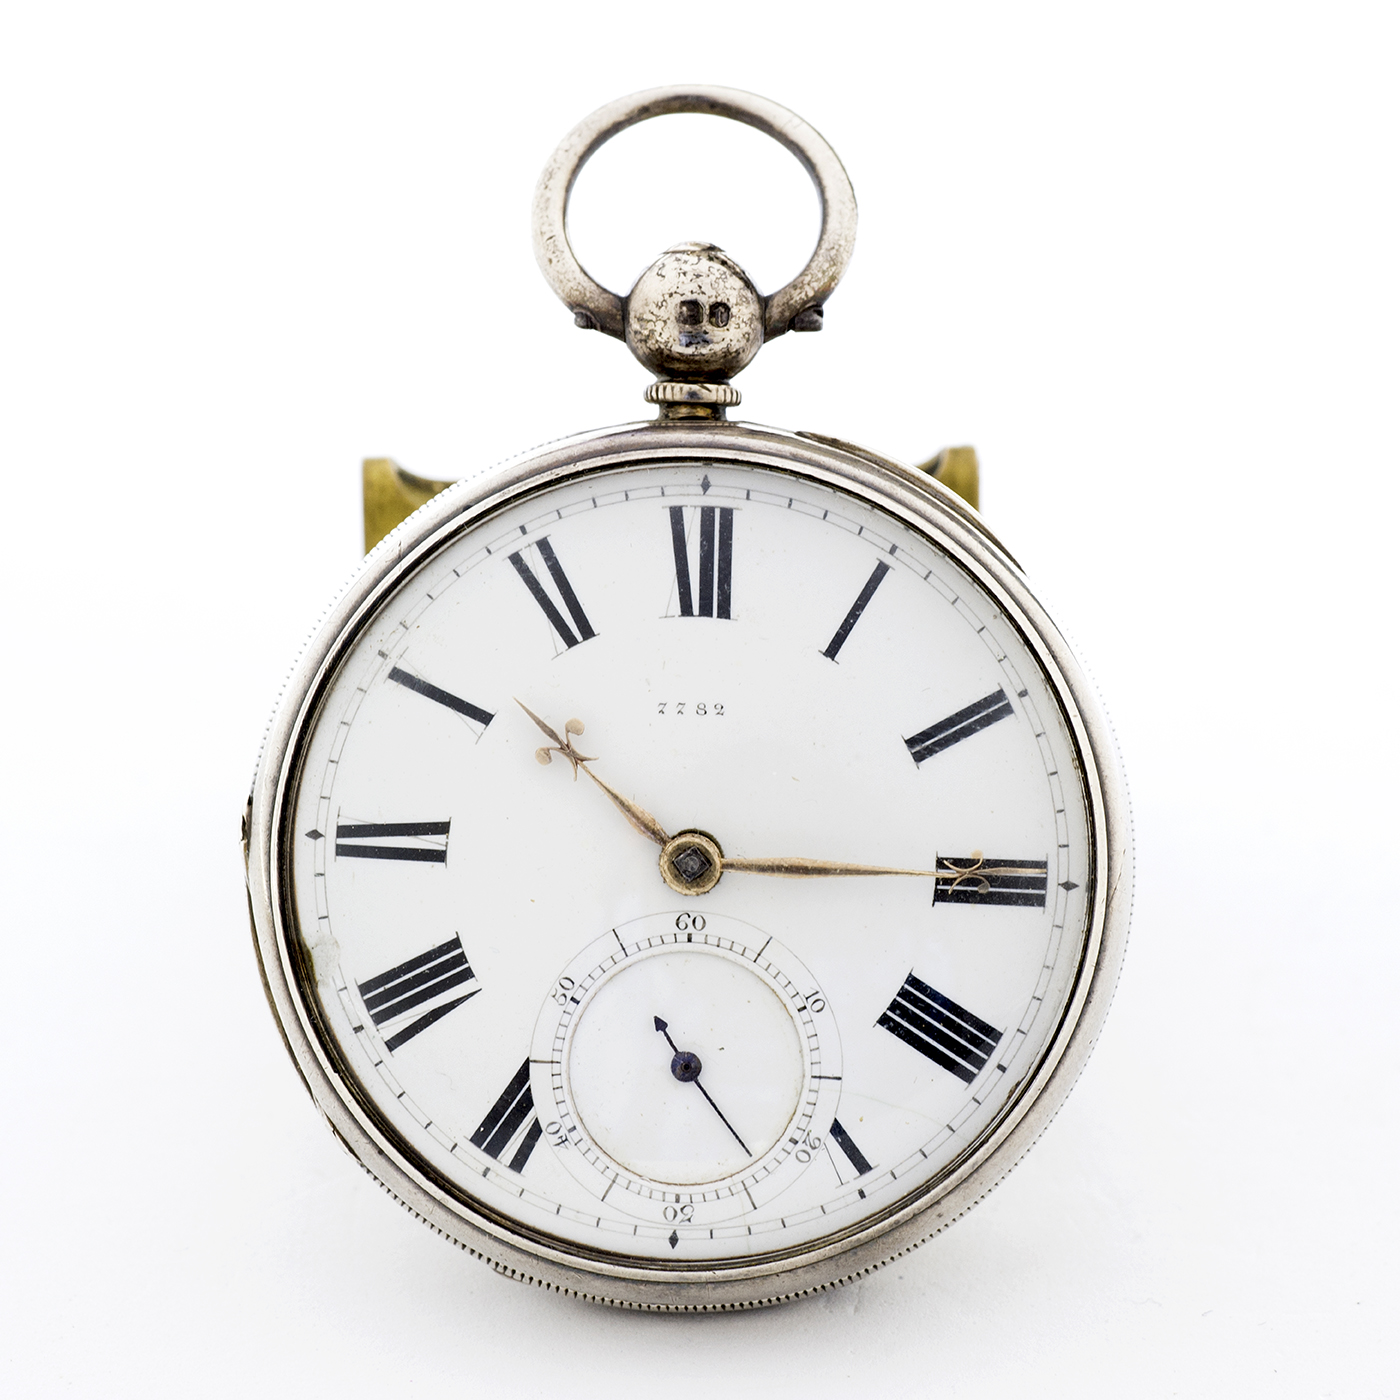 JAMES RITCHIE & SON. Reloj de bolsillo inglés, lepine, Half Fusee (Semicatalino). Londres, 1858.